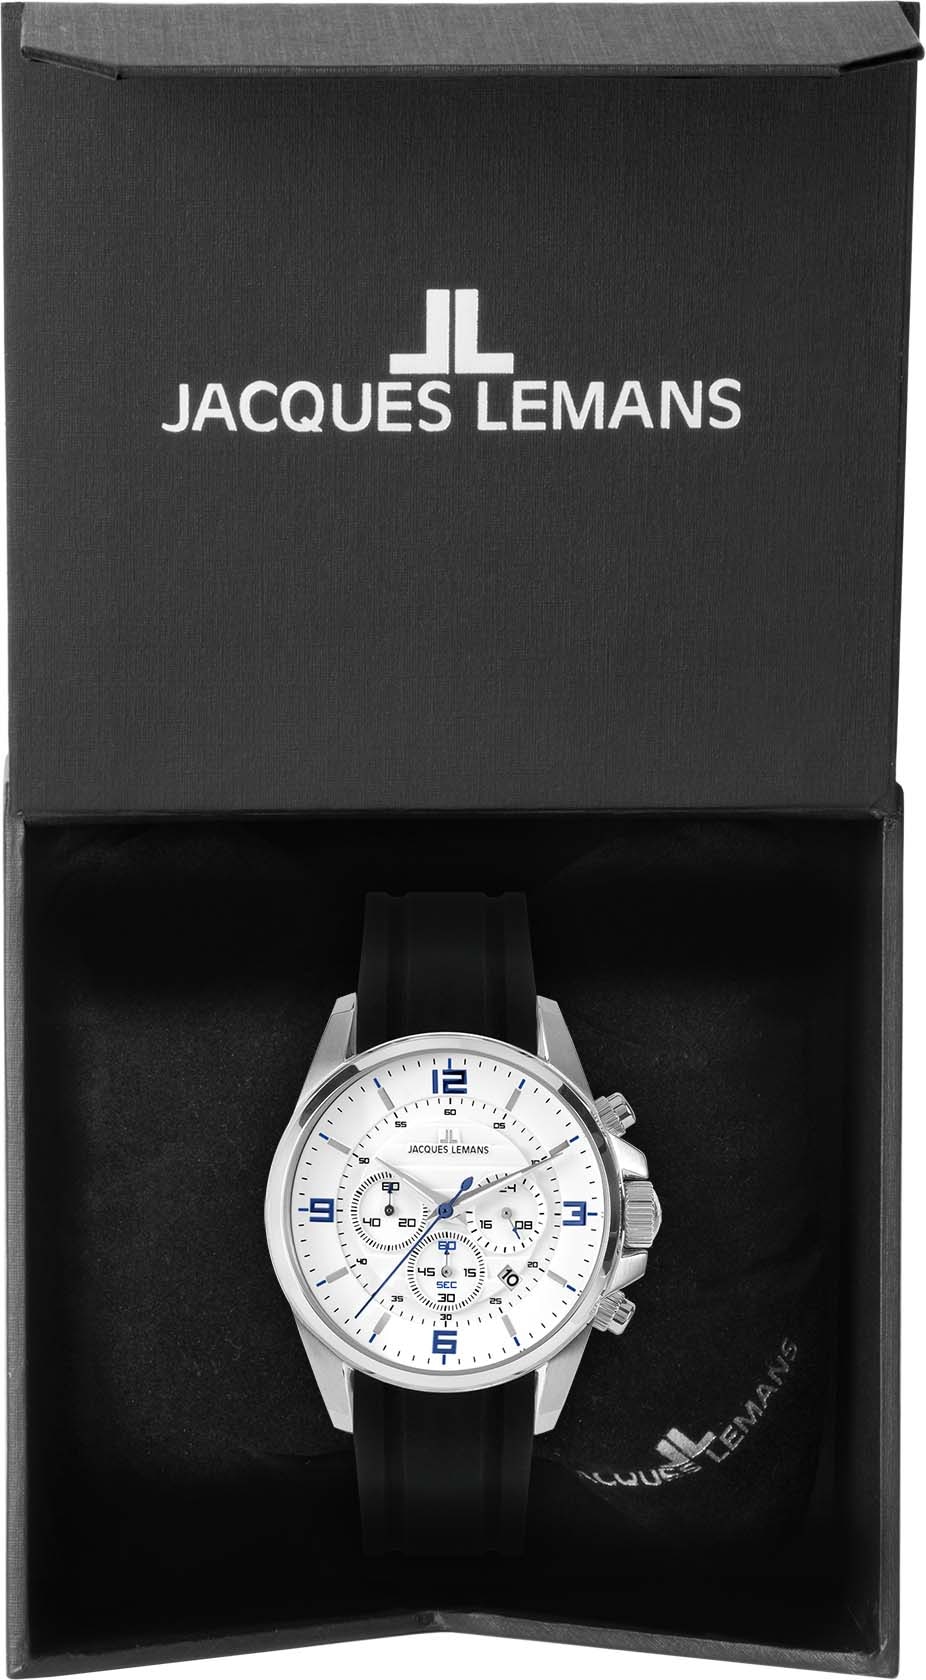 Jacques Lemans Chronograph »Liverpool, 1-2118B« online kaufen bei OTTO